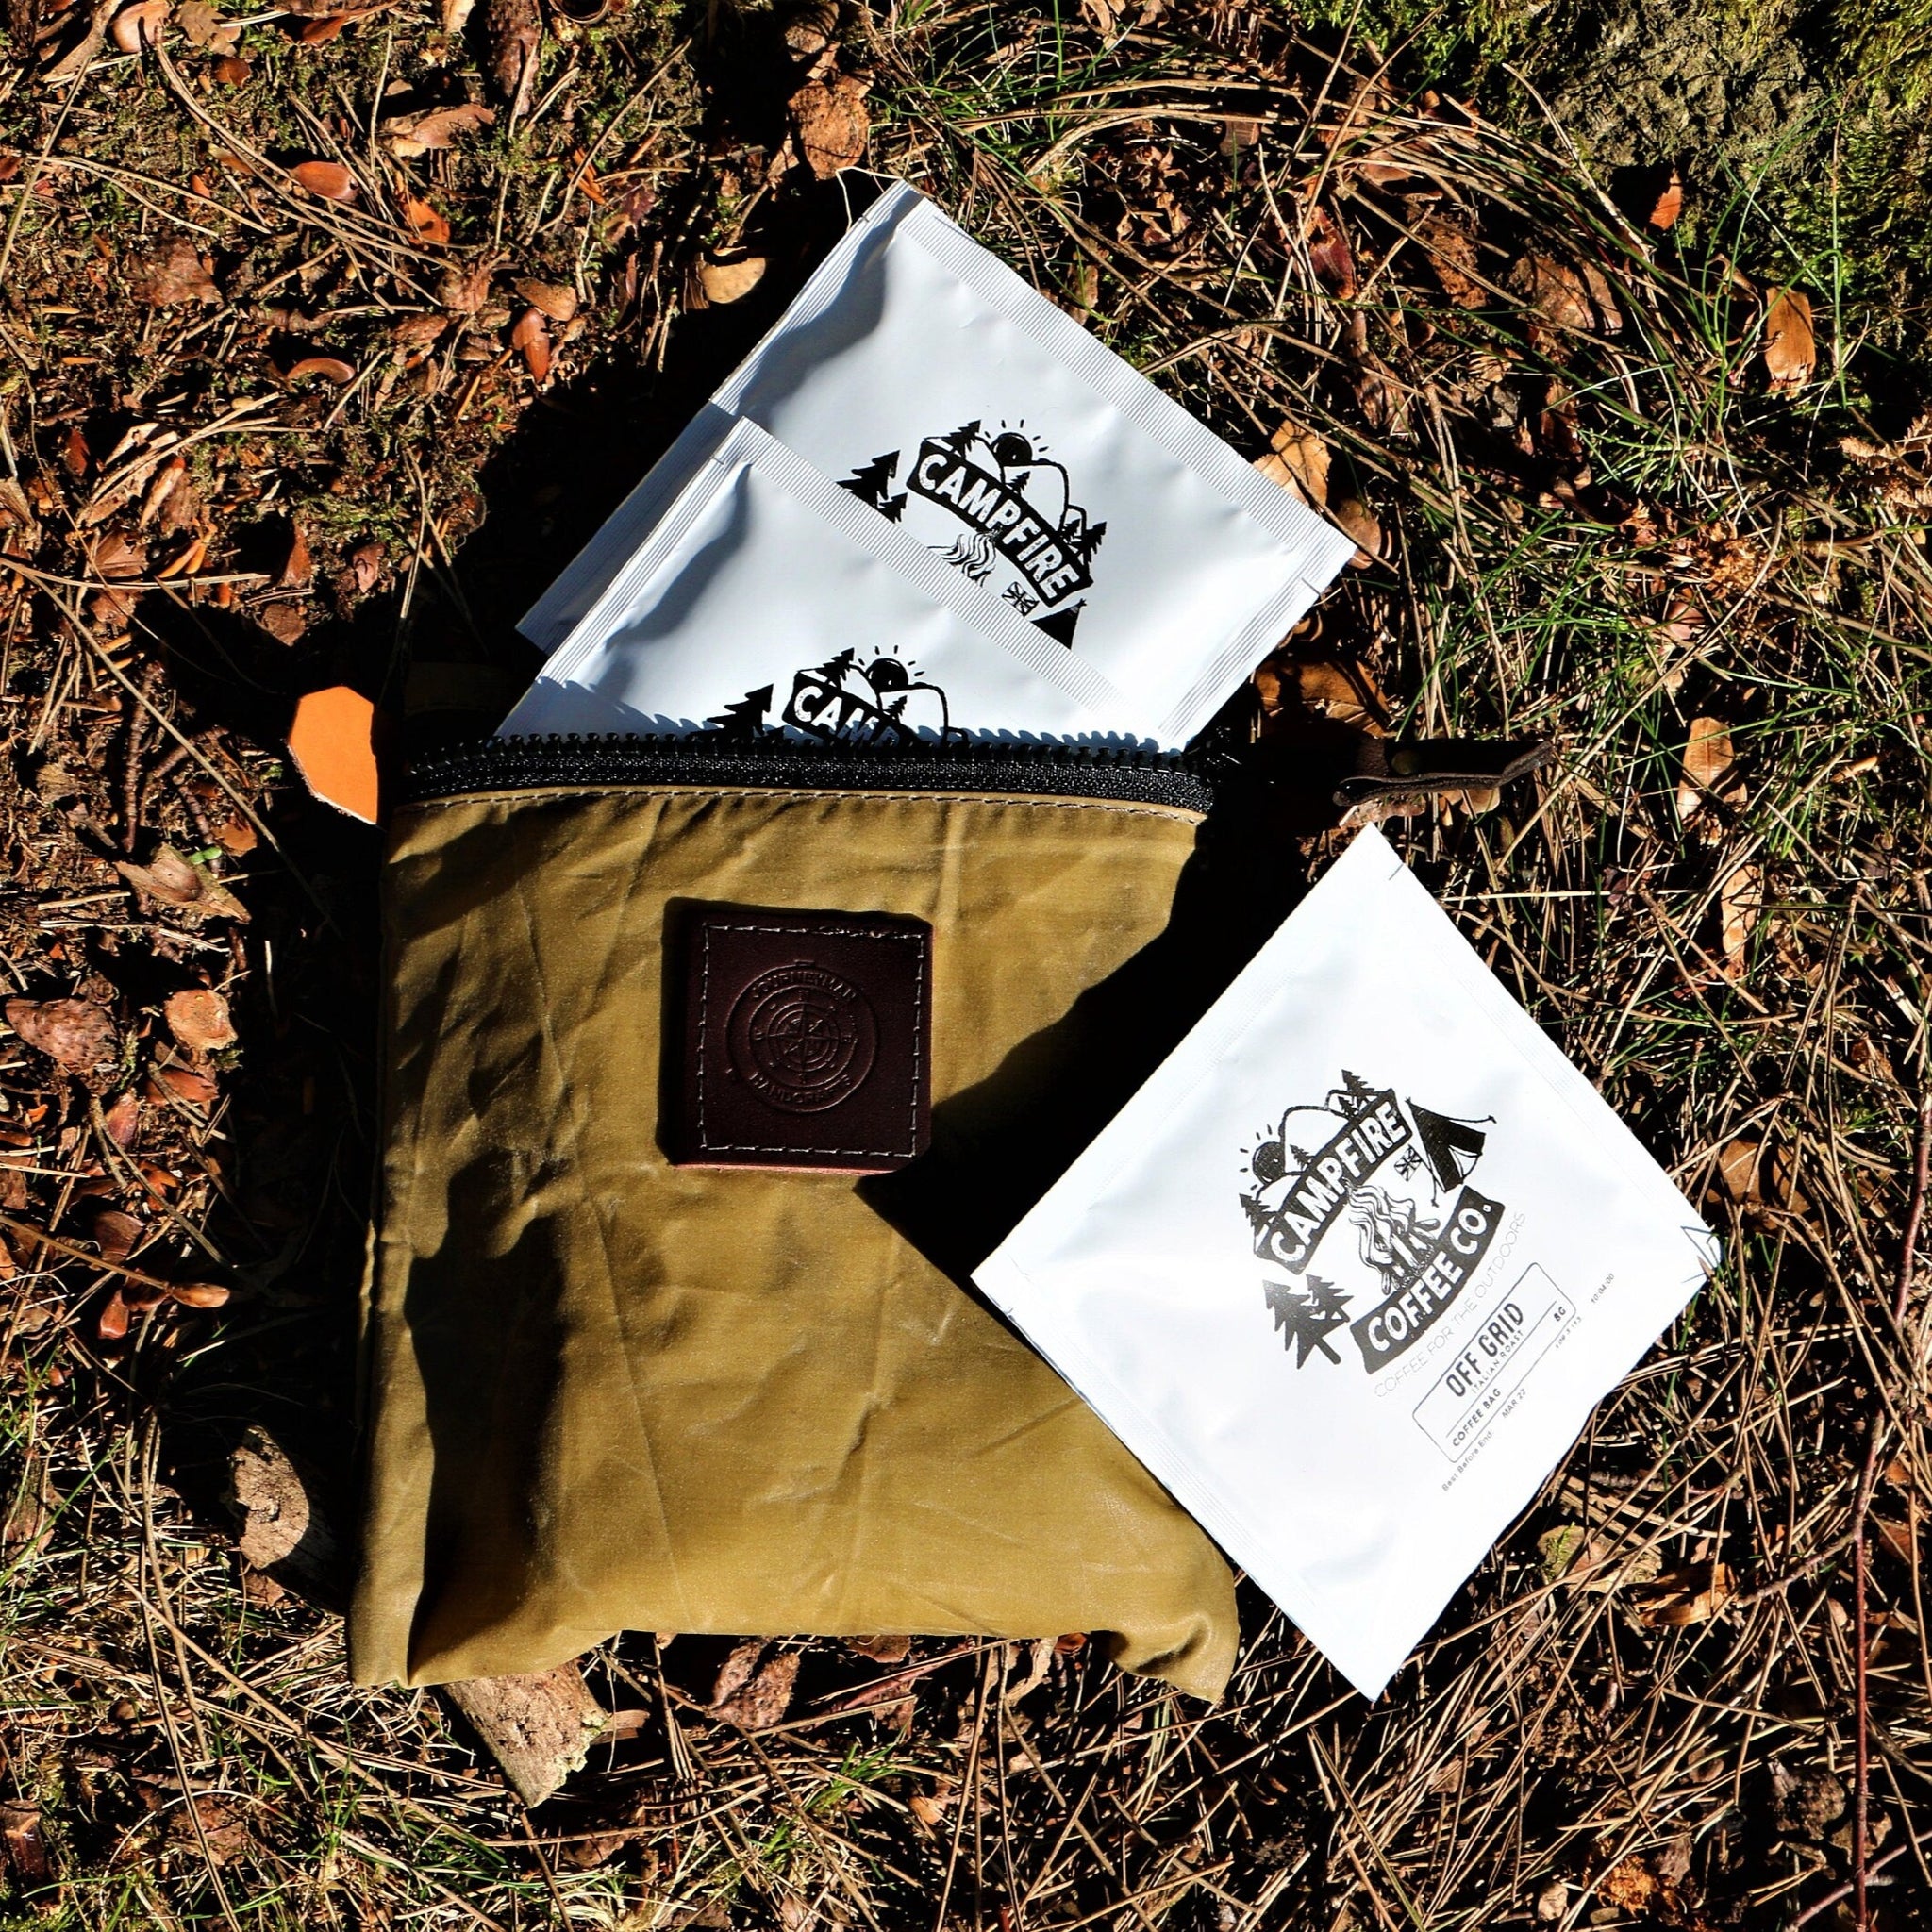 Campfire coffee bags in a Journeyman zipper pouch